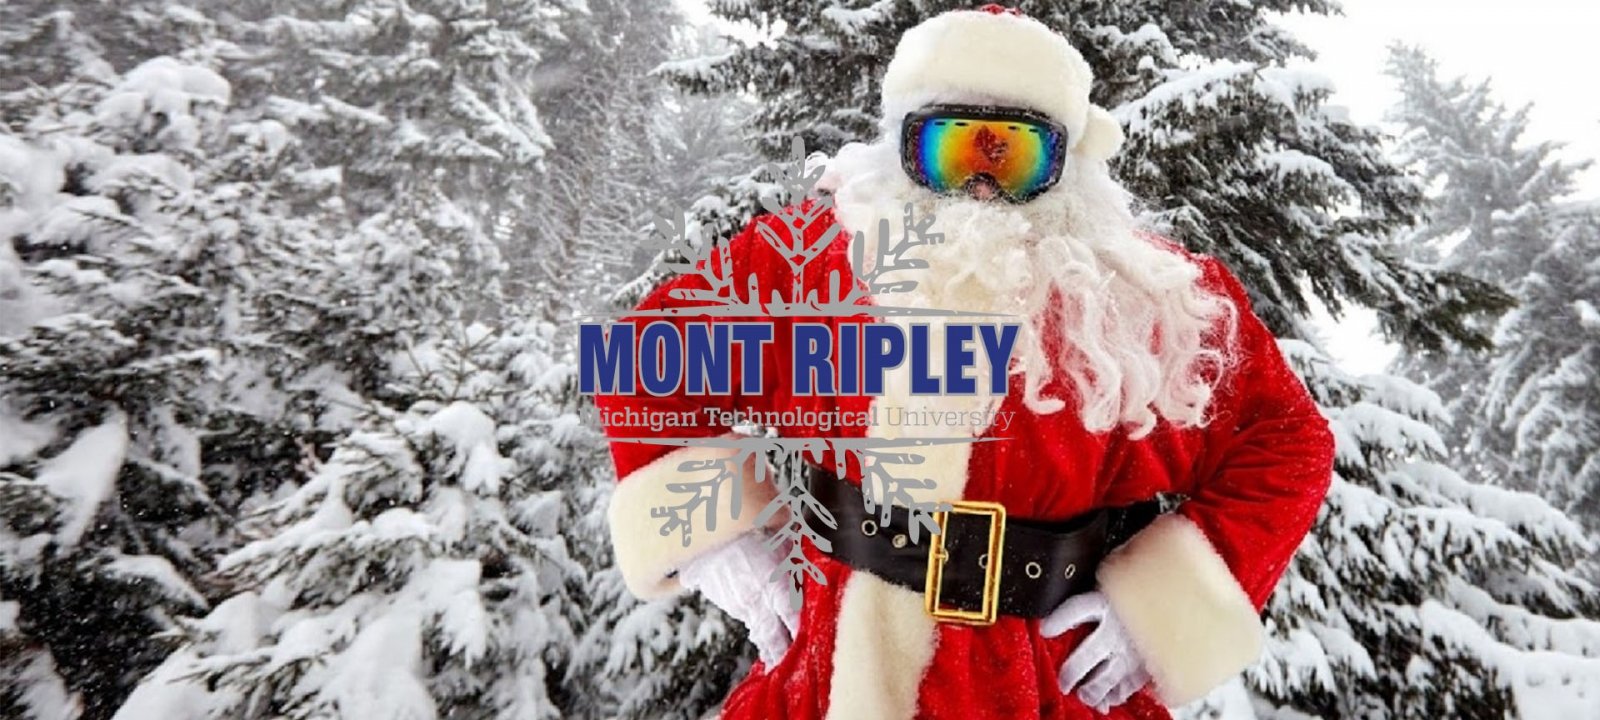 Santa with ski goggles on